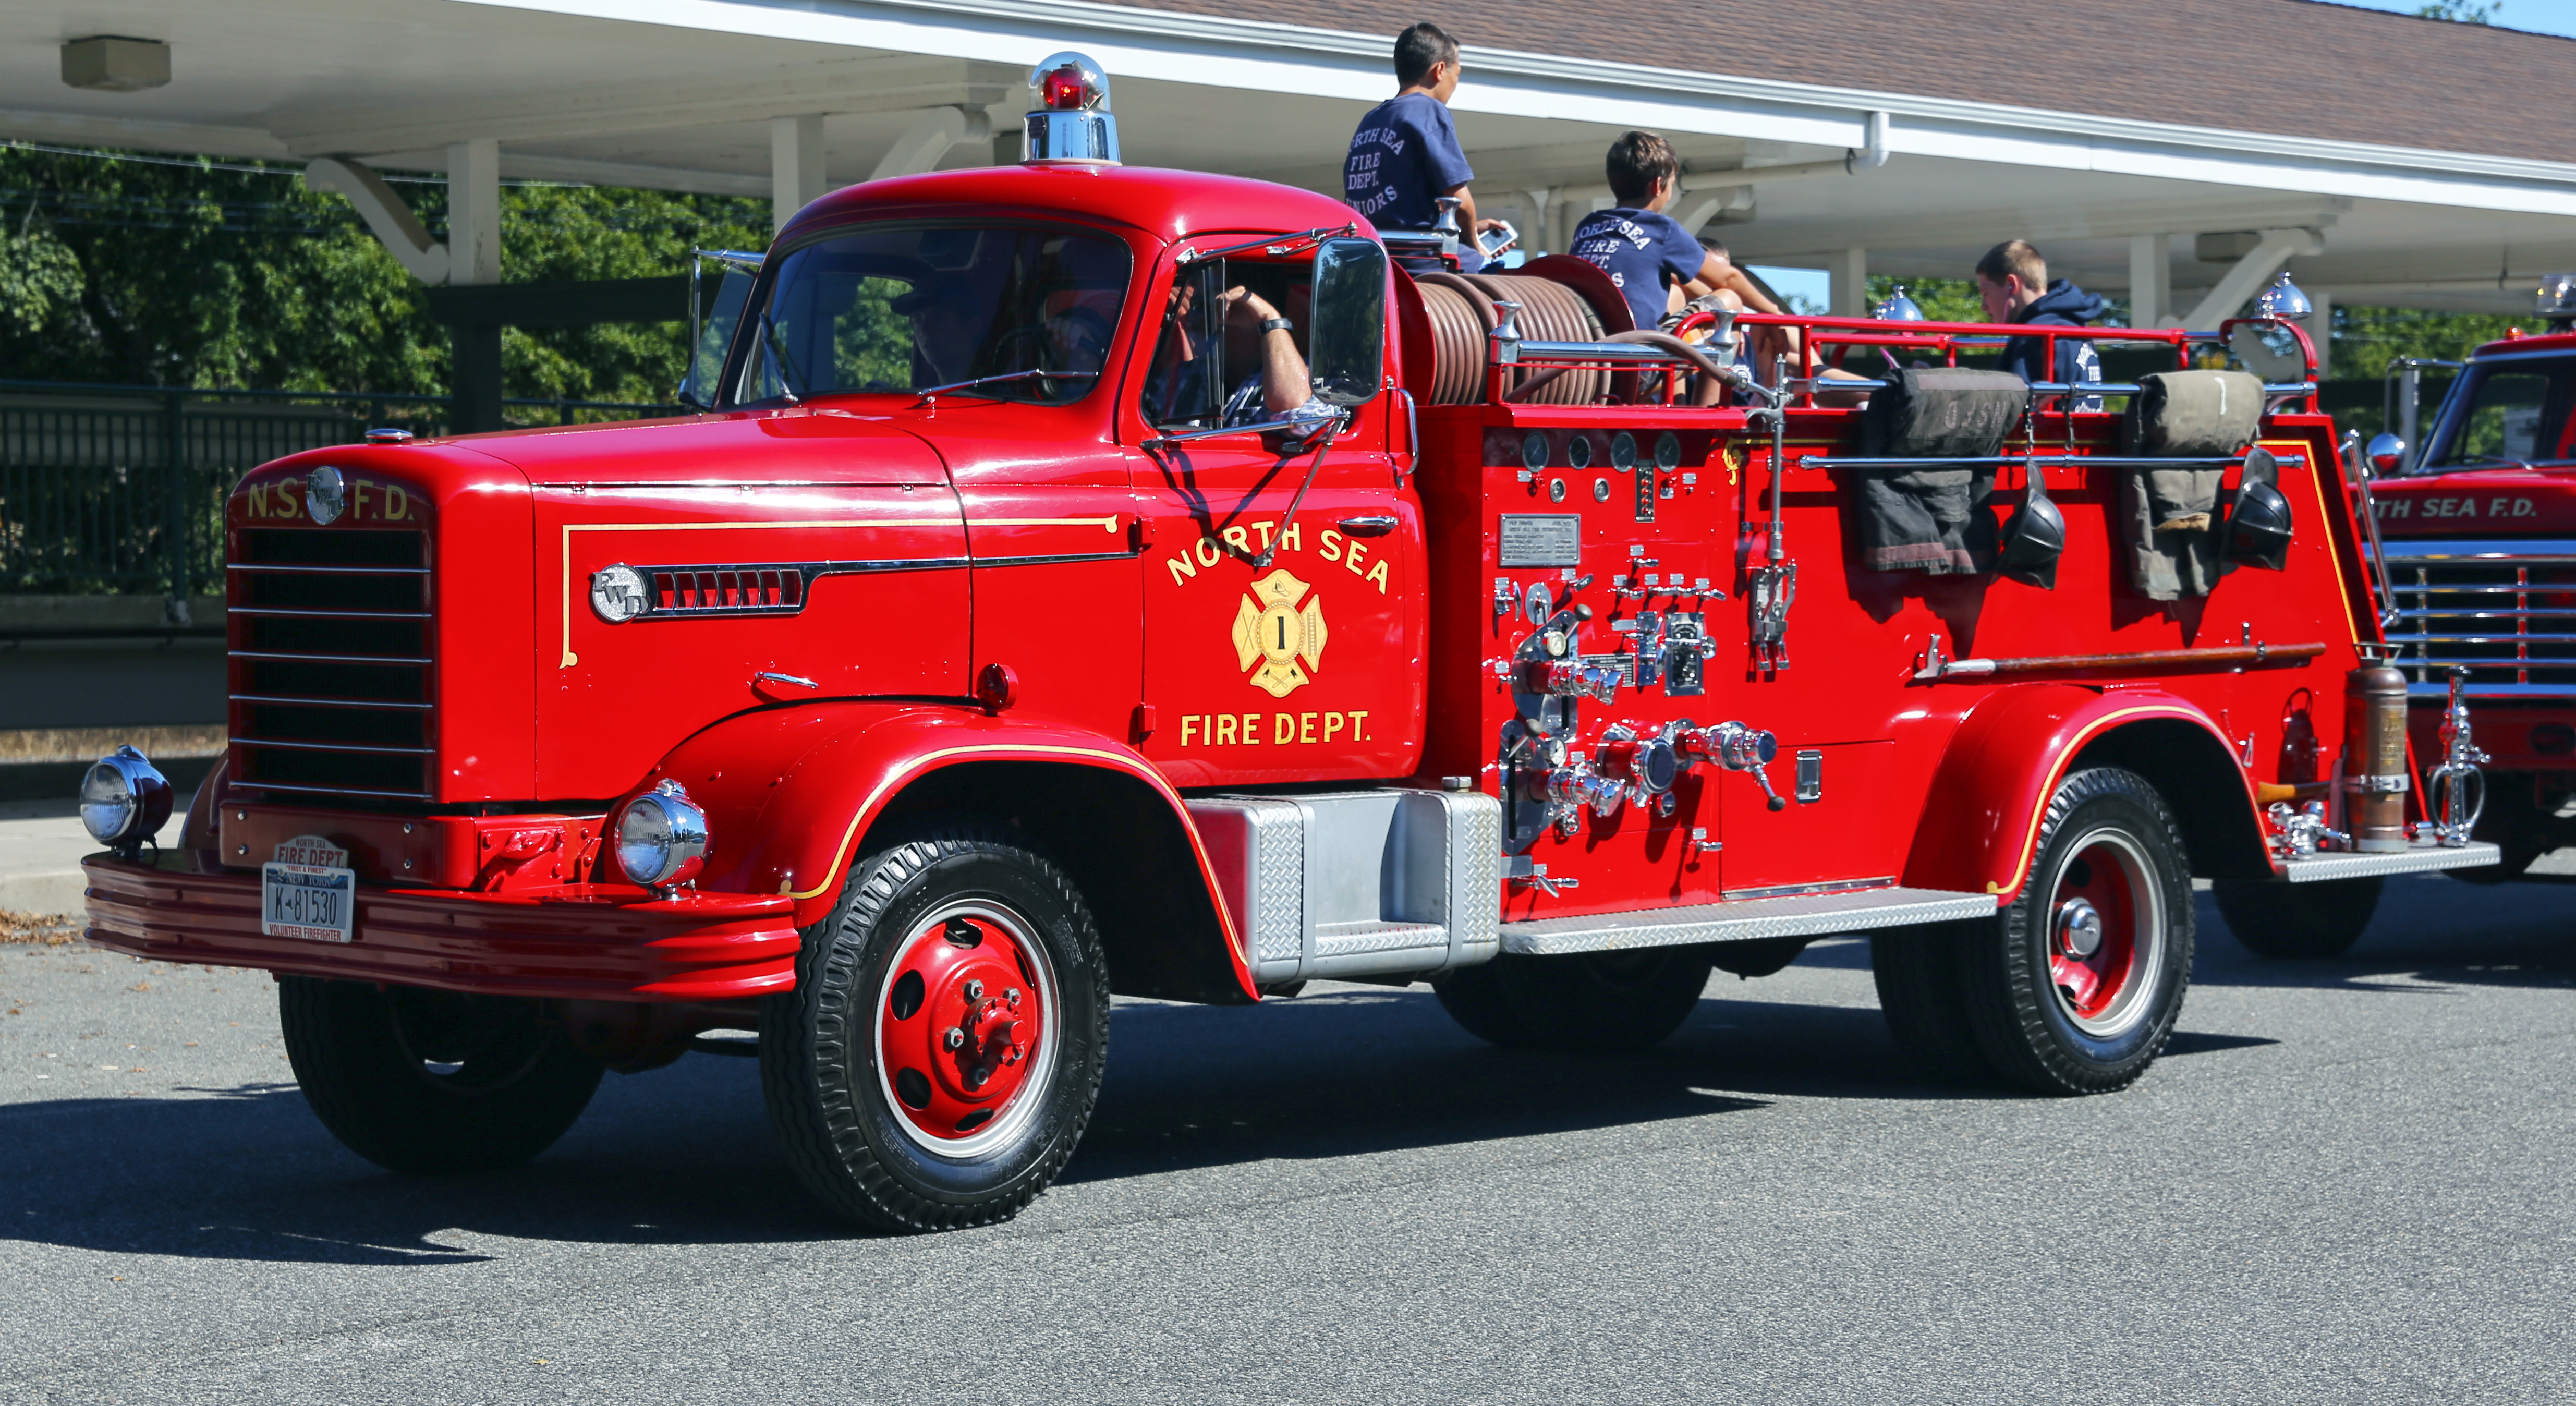 File:1958 FWD fire engine, North Sea FD.jpg - Wikimedia Commons